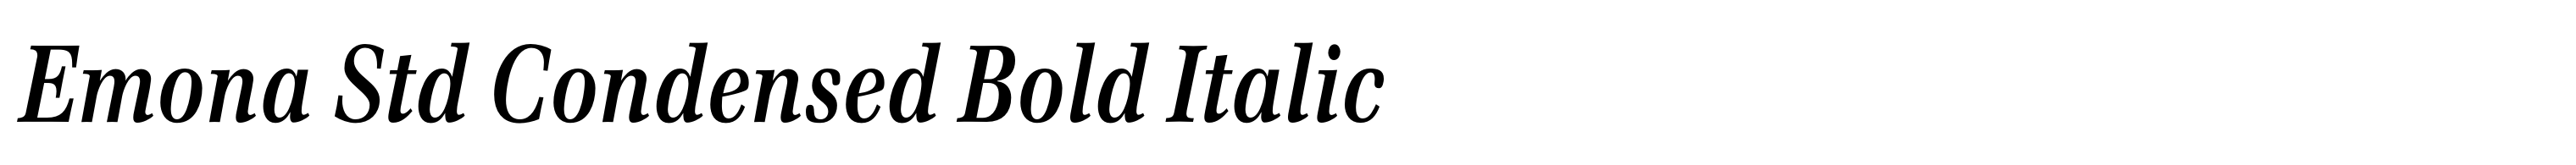 Emona Std Condensed Bold Italic